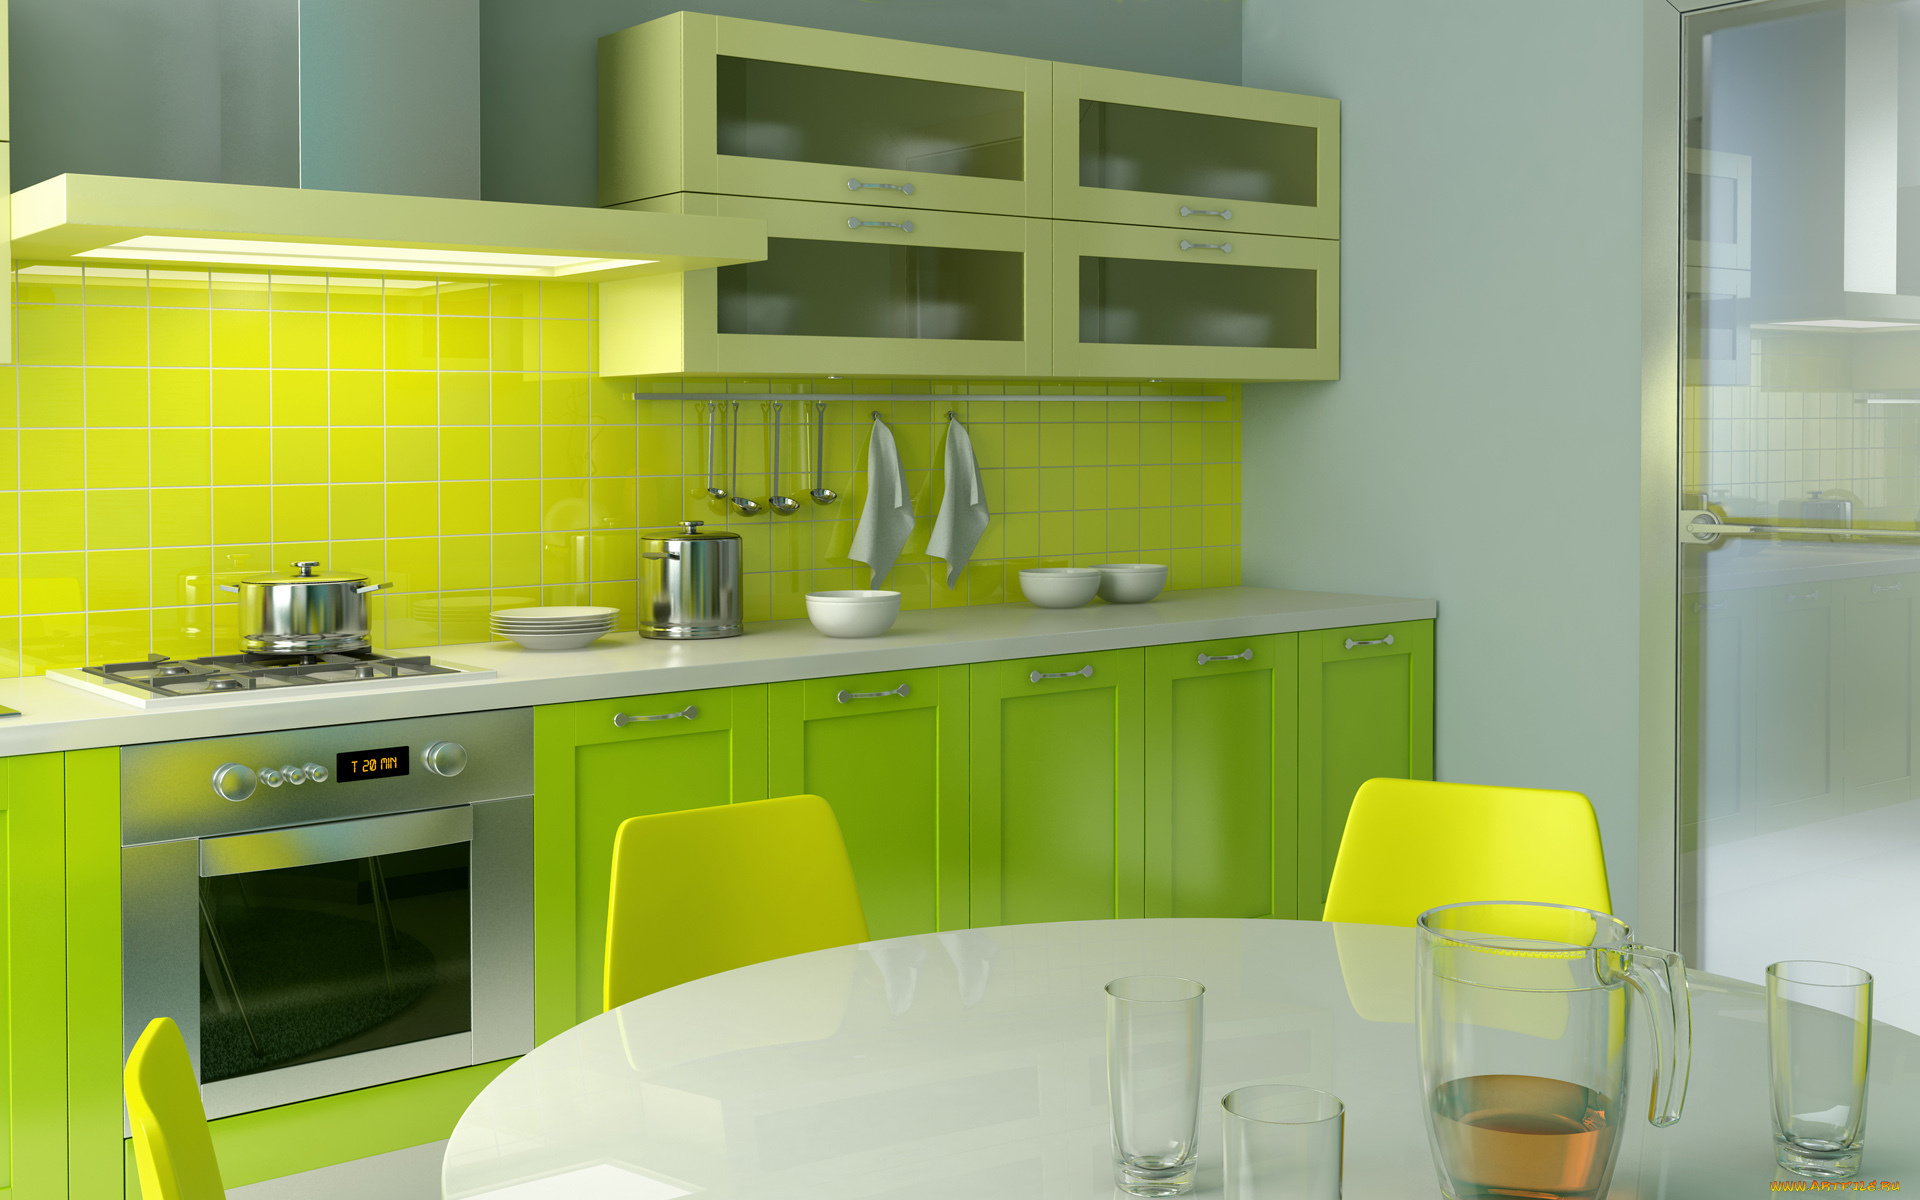 3д, графика, realism, реализм, яркий, интерьер, комната, дизайн, стиль, кухня, зеленый, желтый, стол, стулья